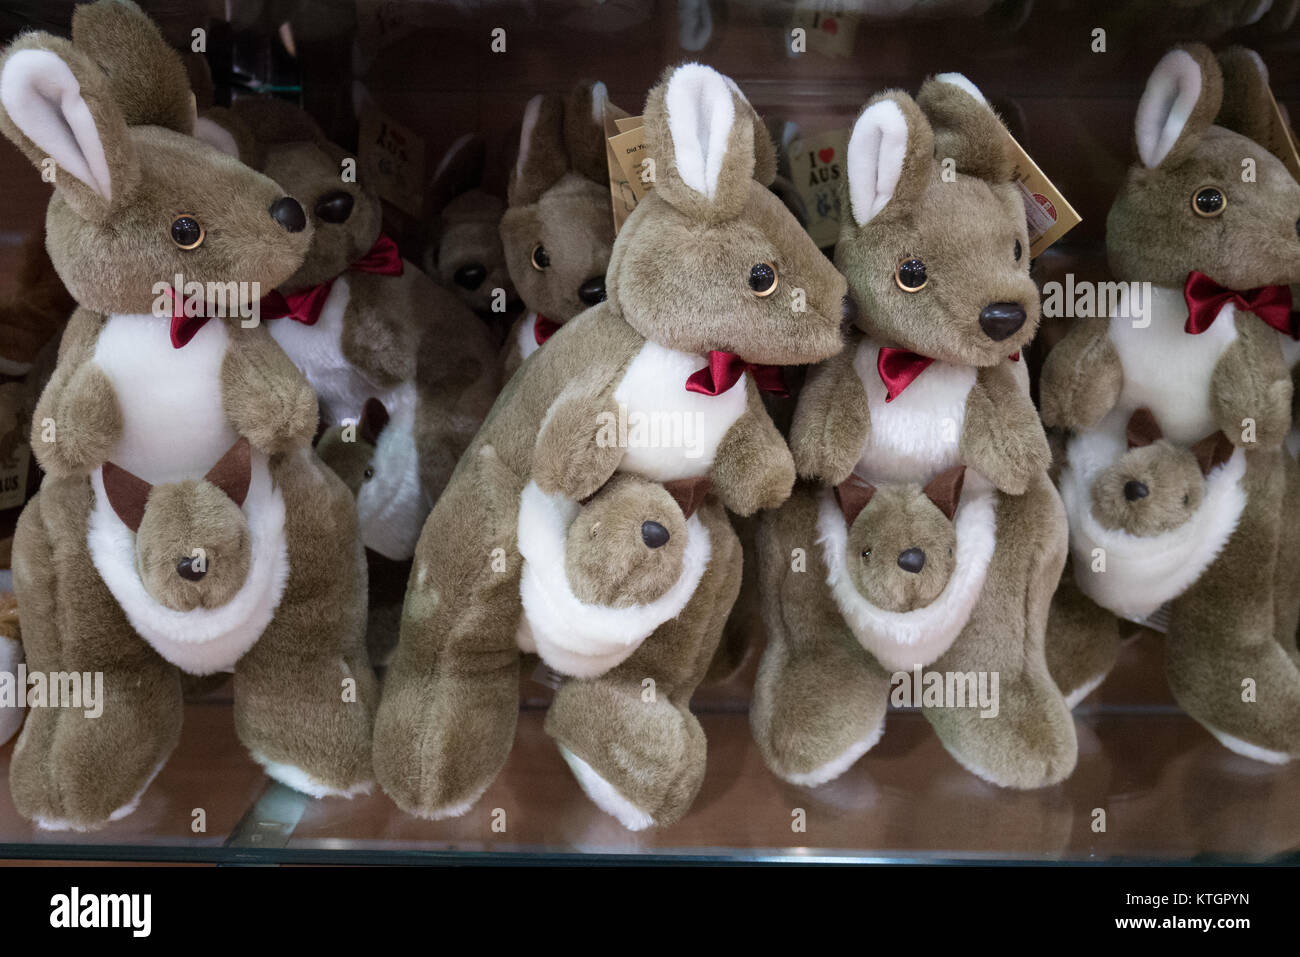 Kangaroo stuffed animal hi-res stock photography and images - Alamy